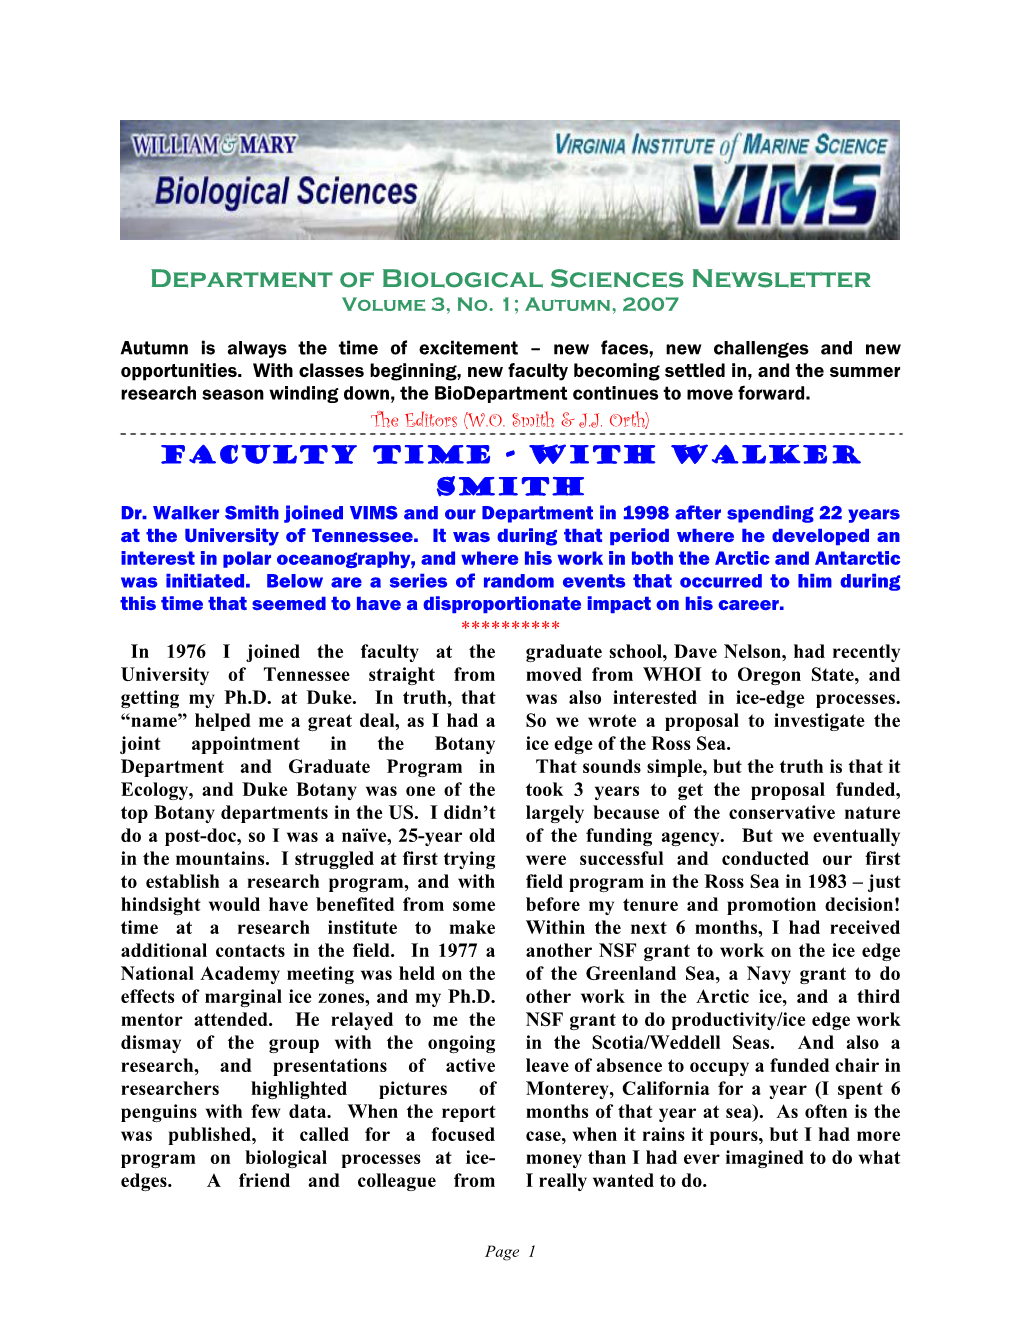 Department of Biological Sciences Newsletter Volume 3, No